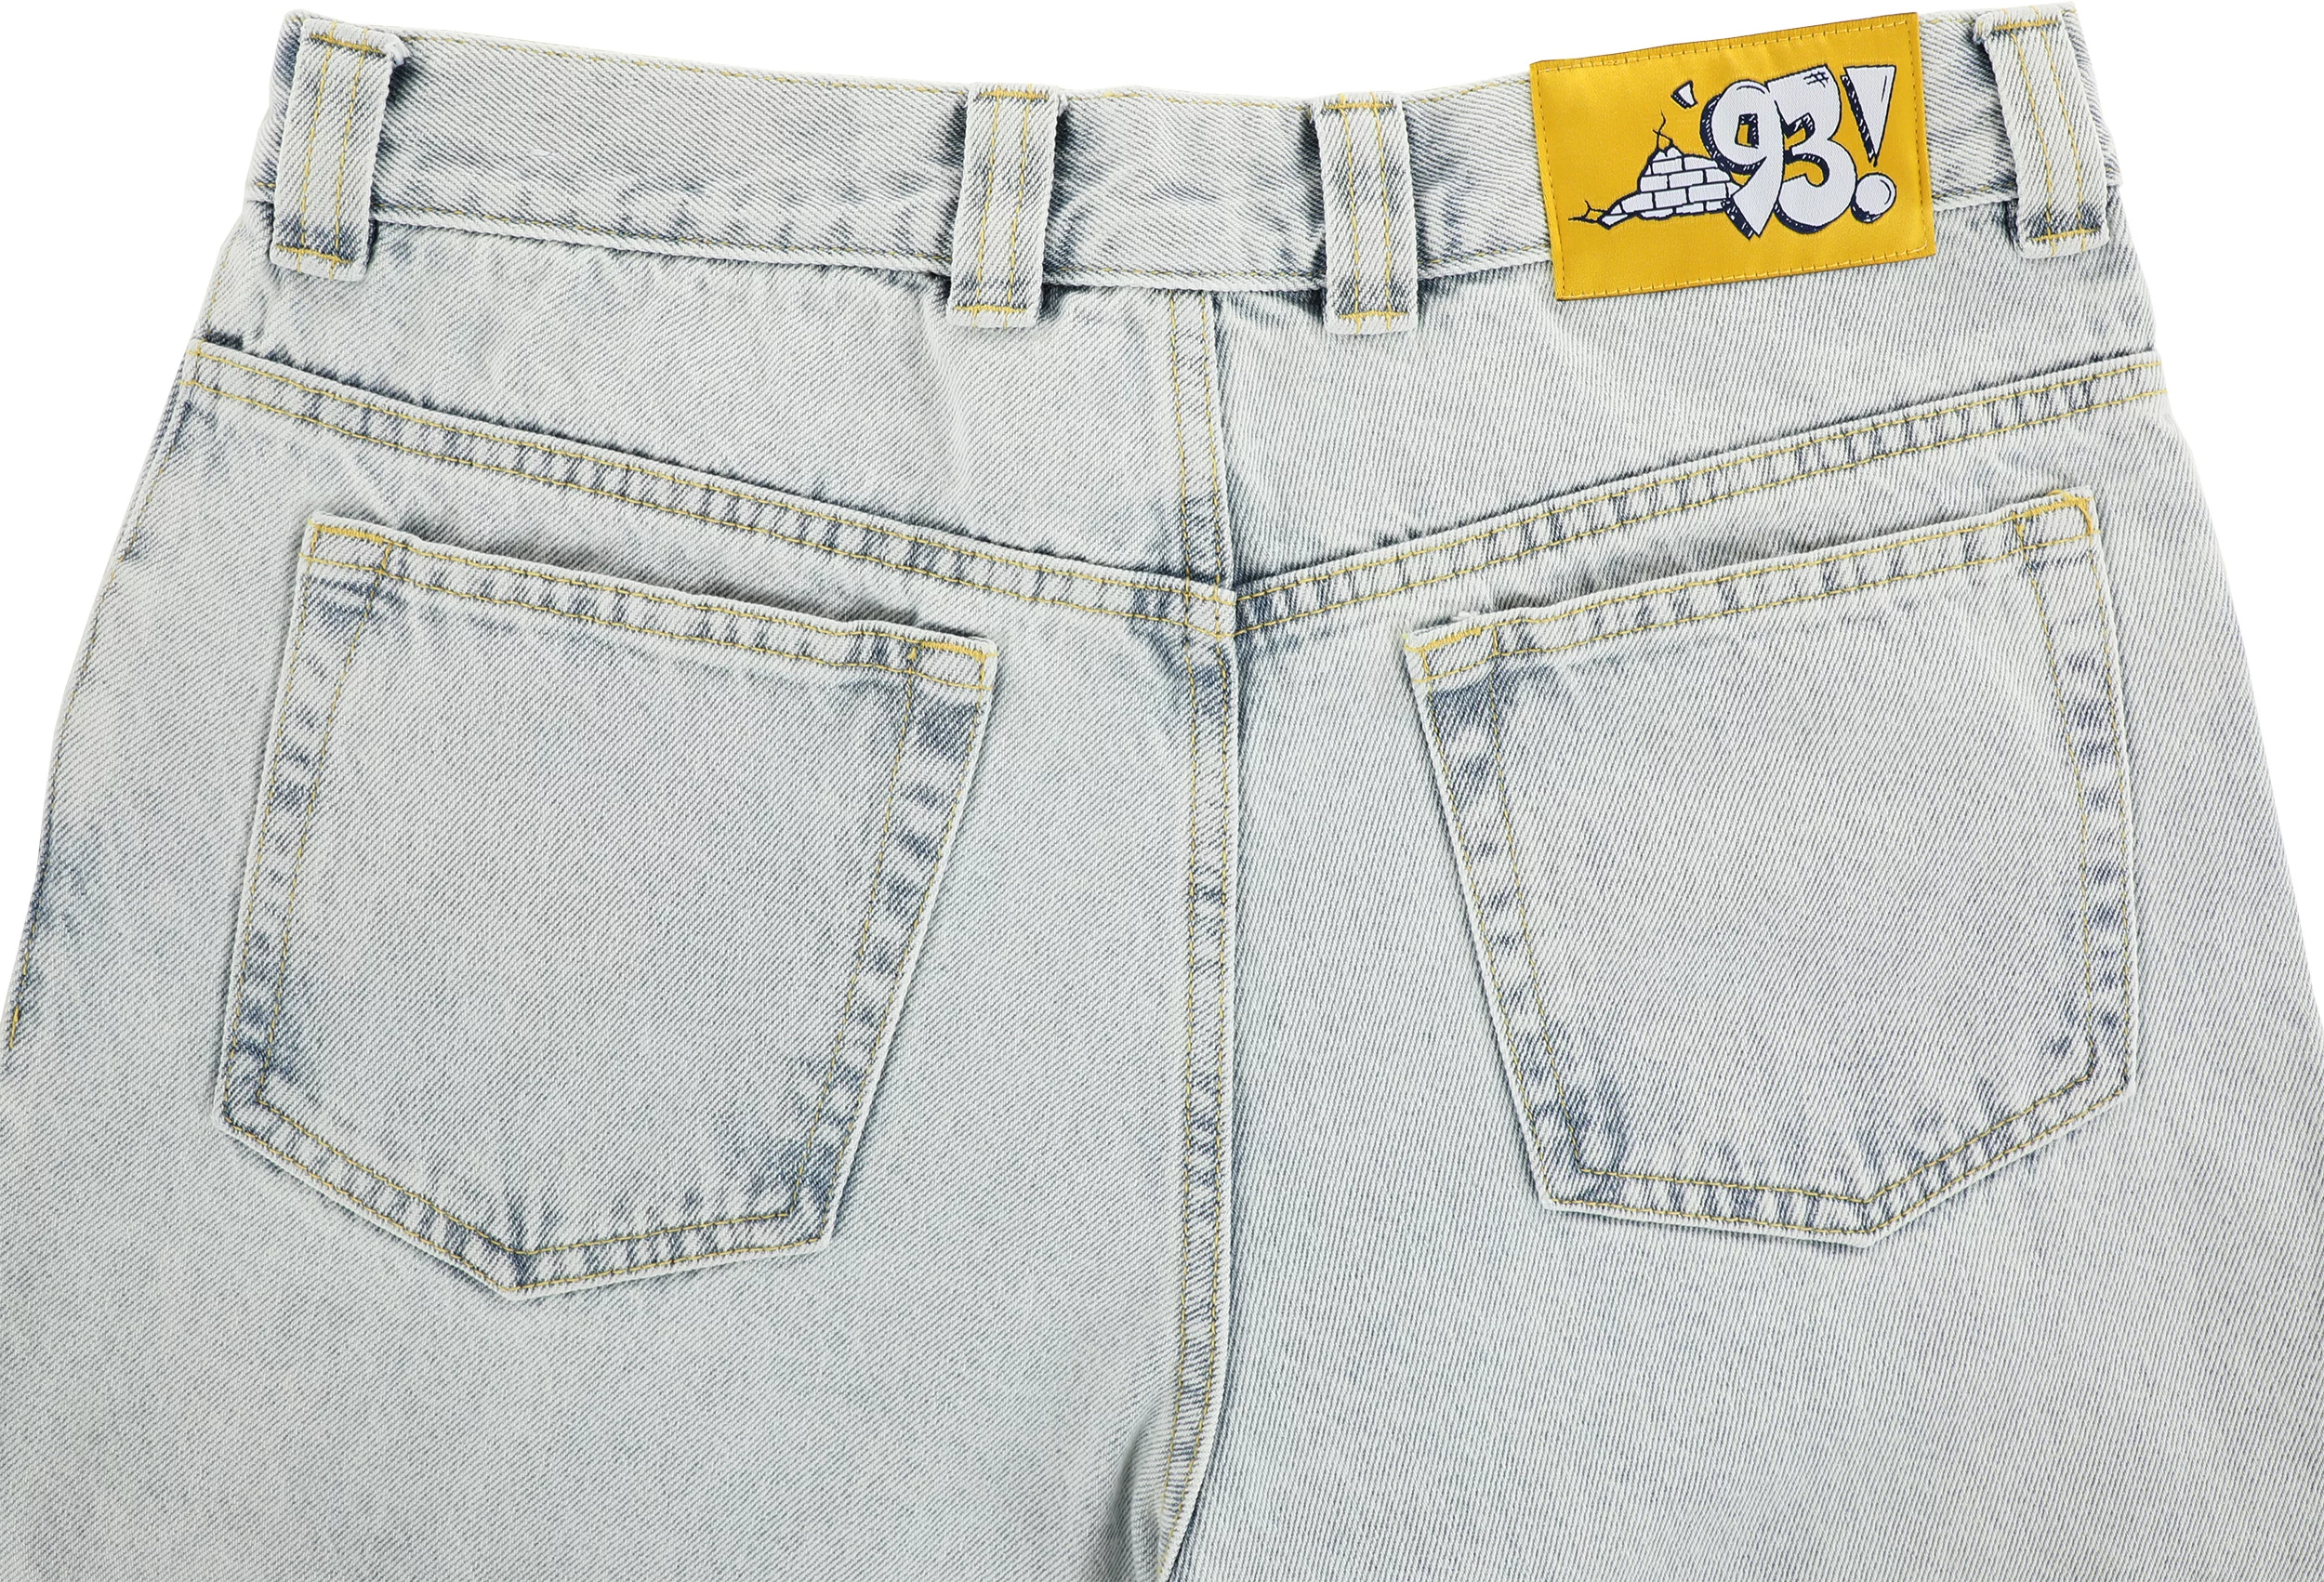 Polar Skate Co. '93! Denim Jeans - Free Shipping | Tactics